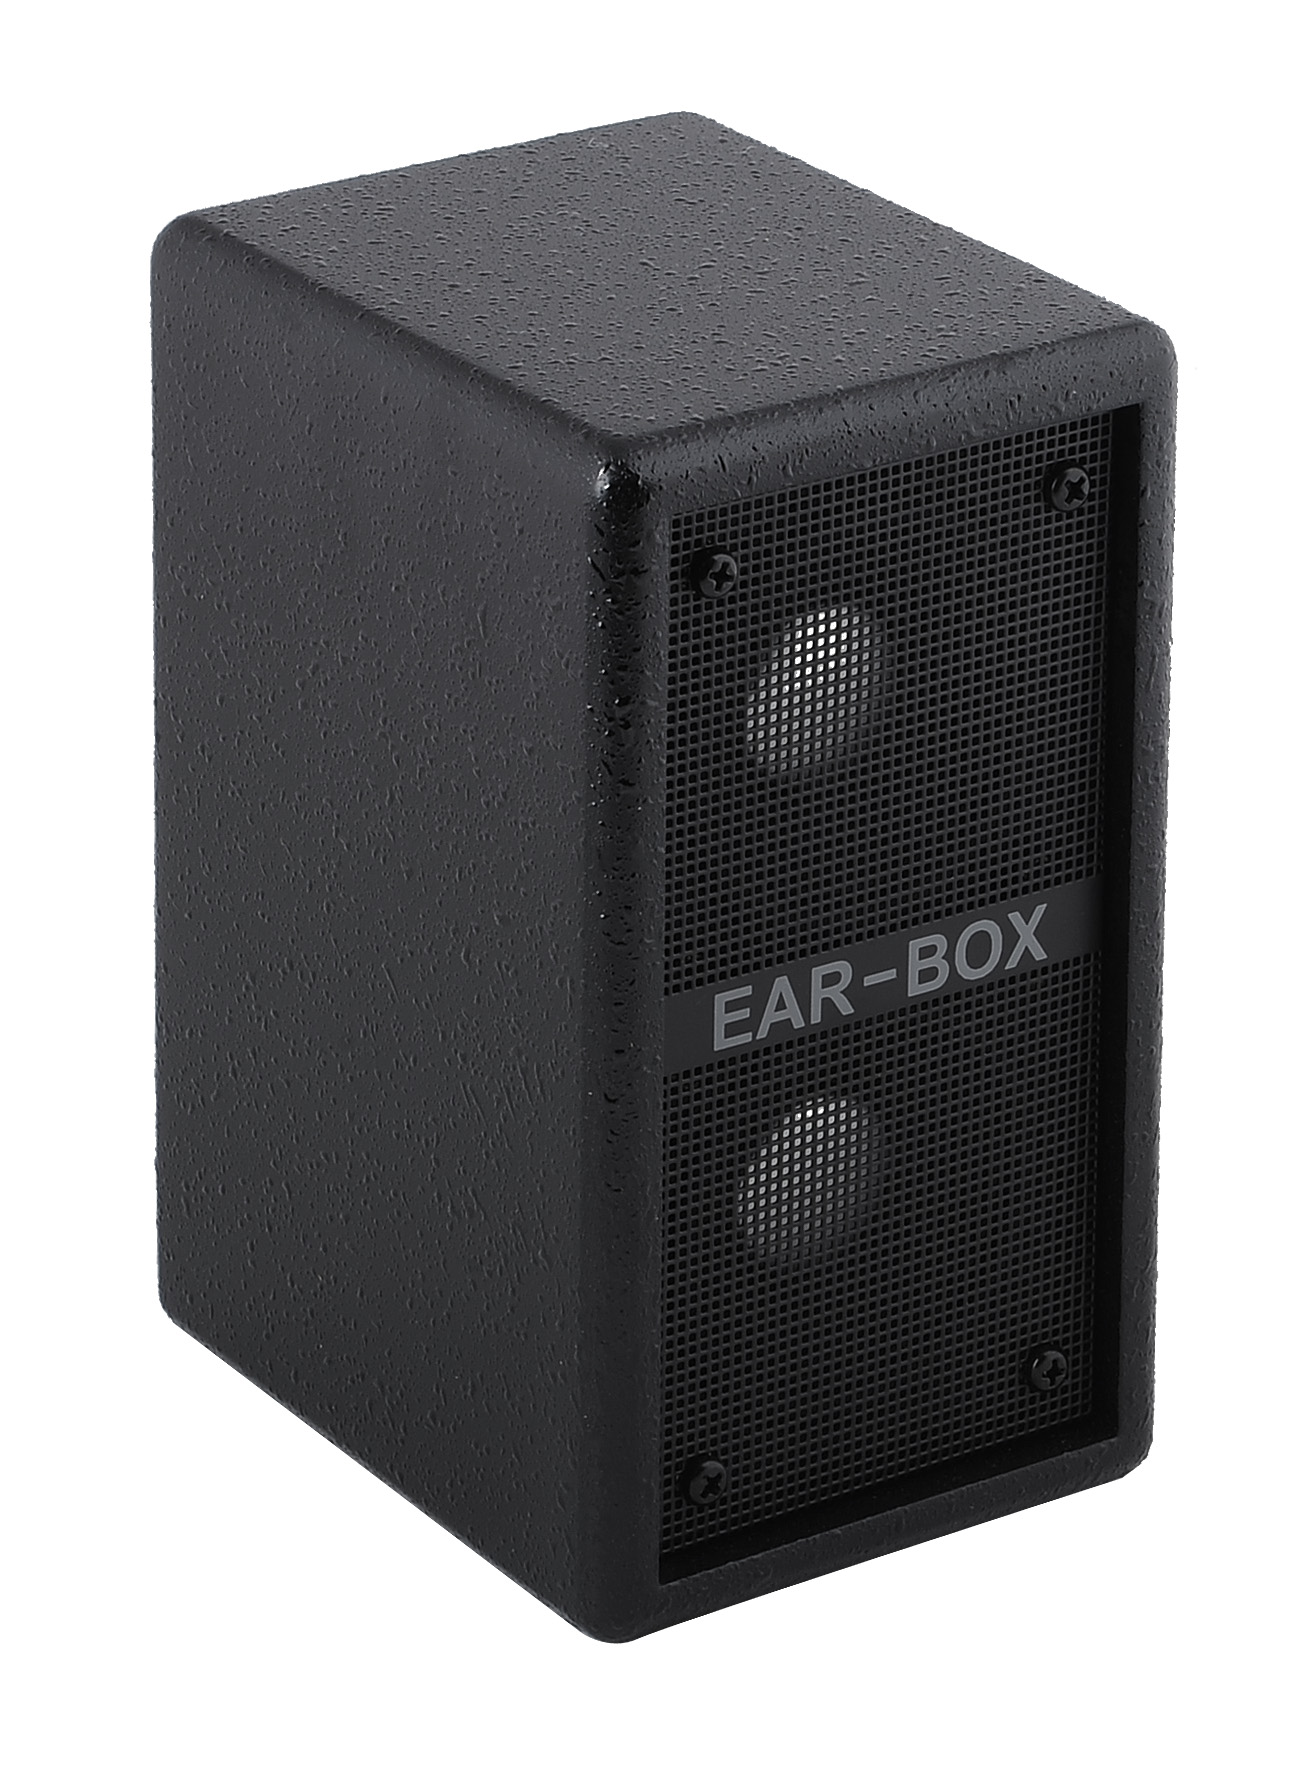 Ear-Box